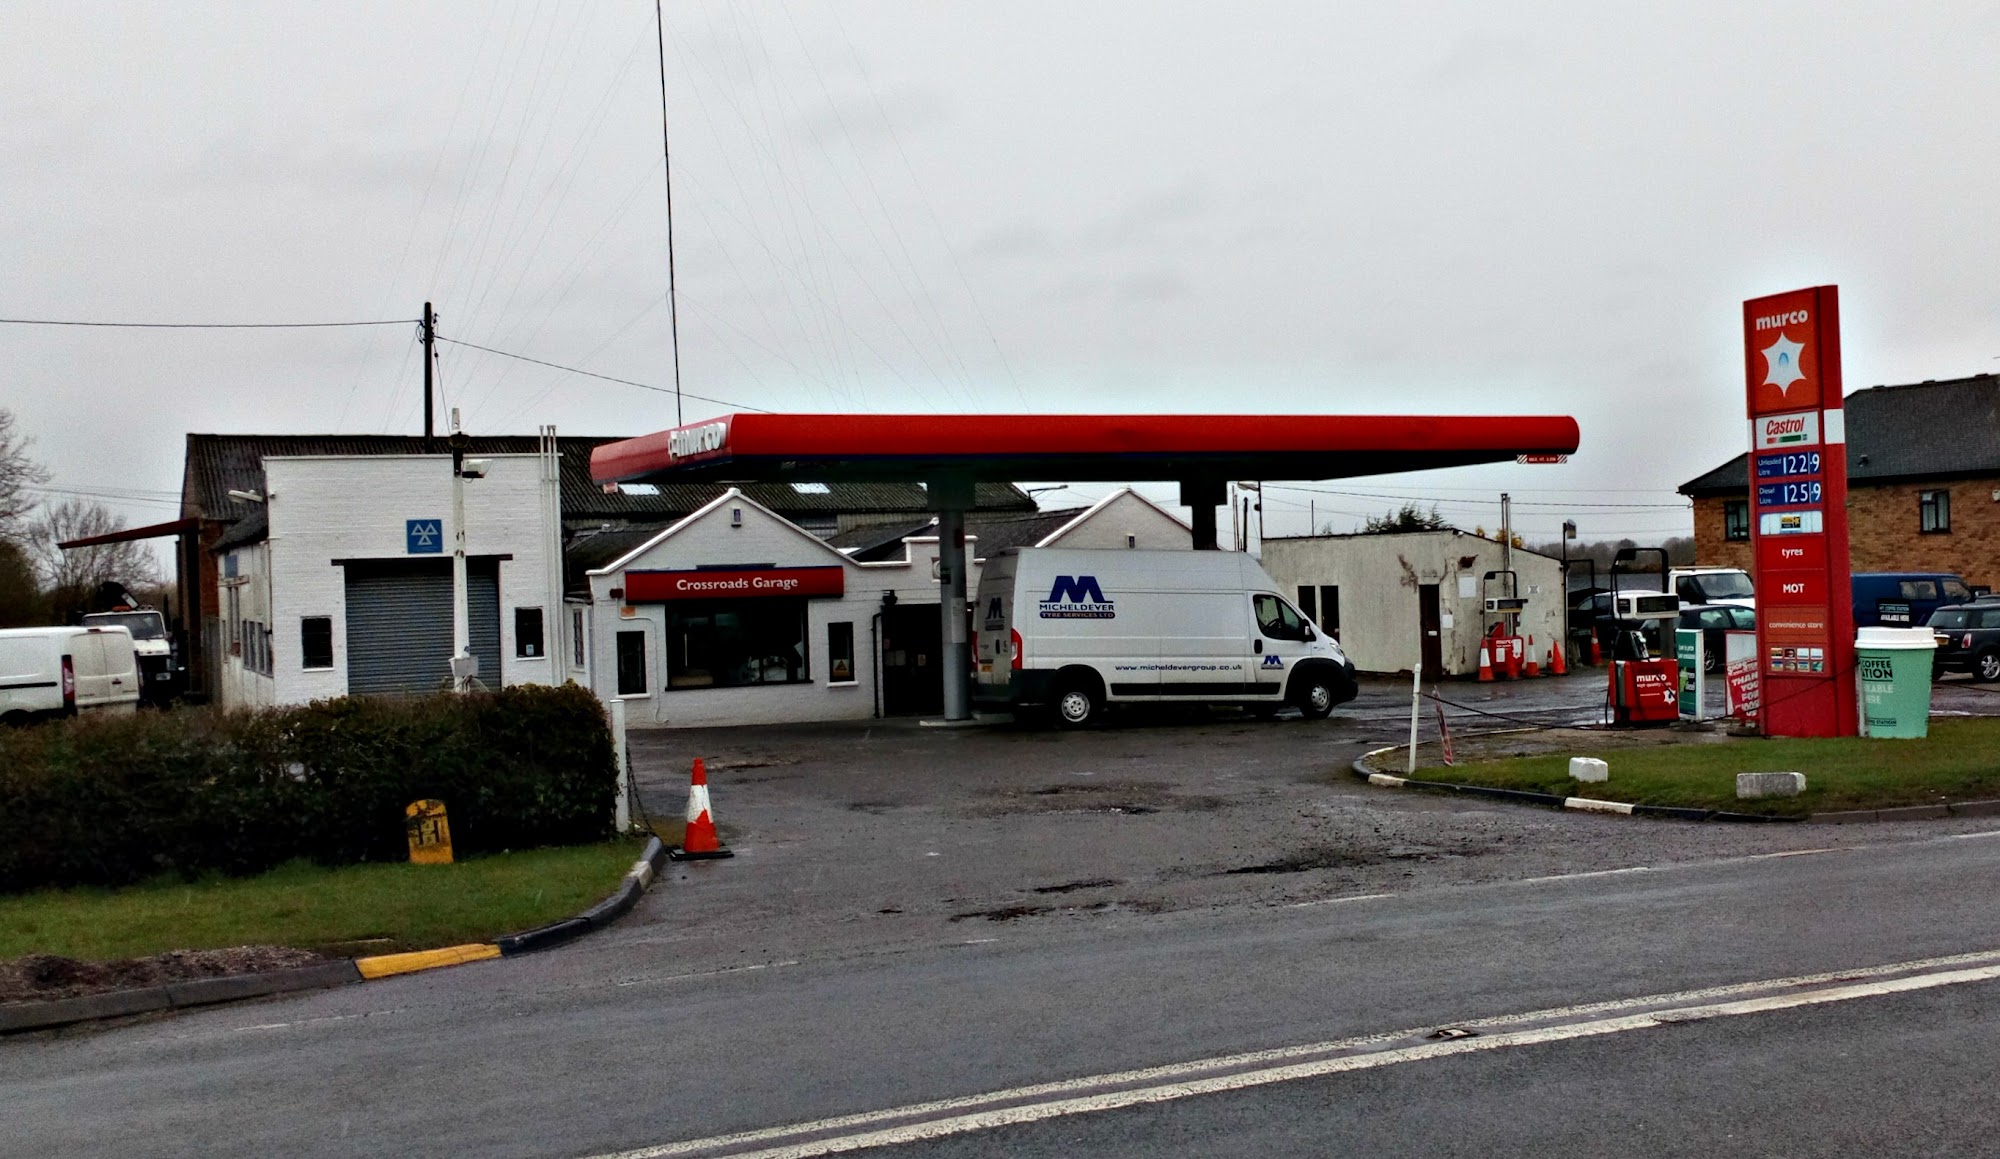 Murco Fuel Station